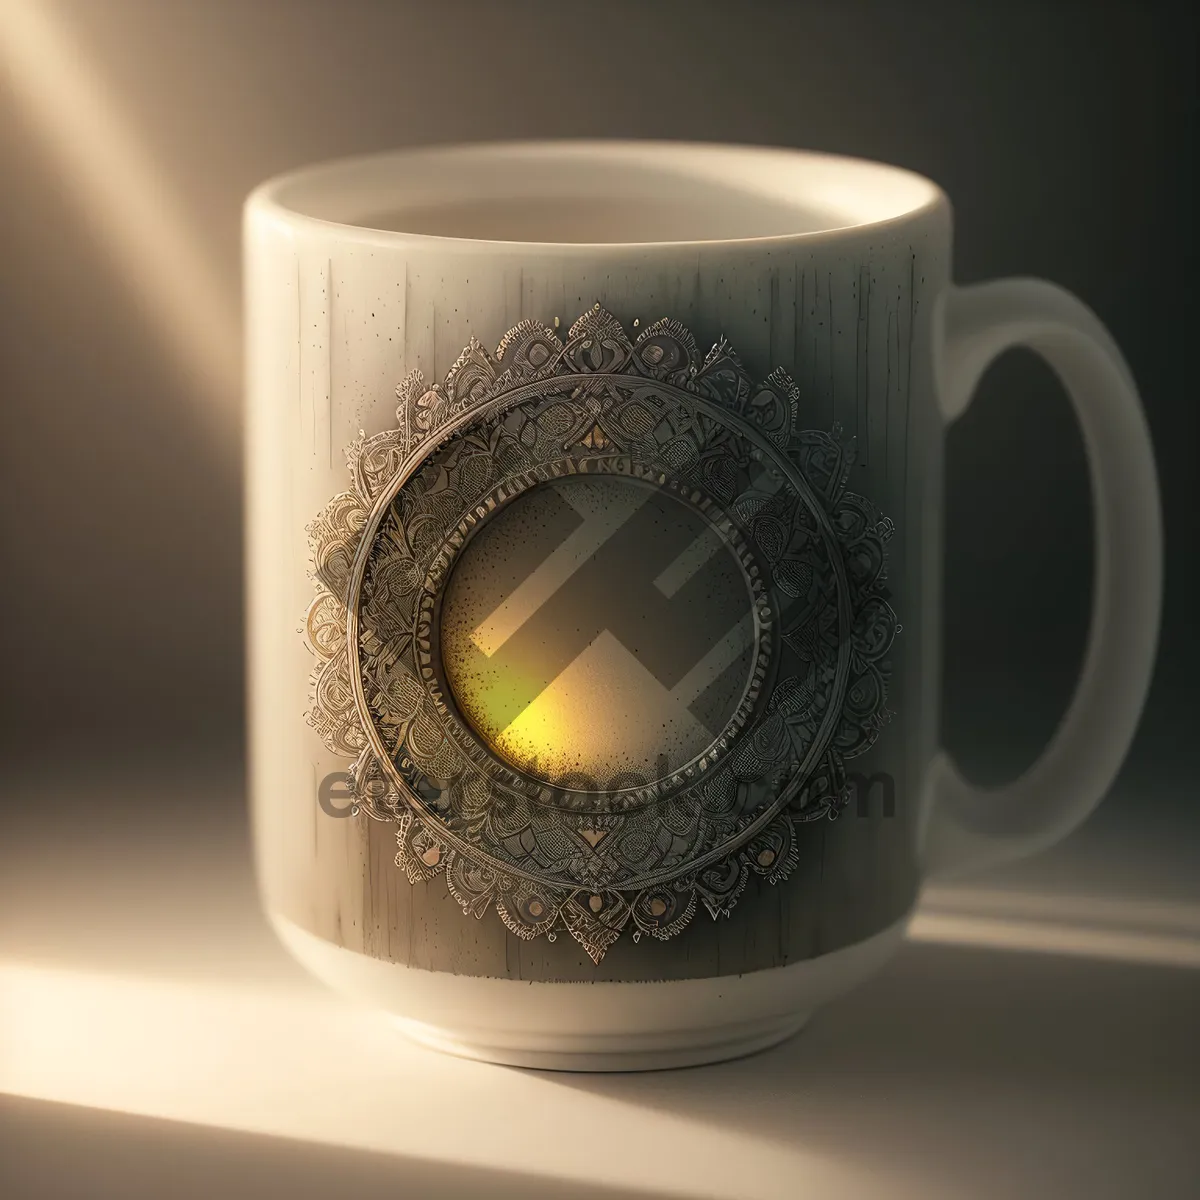 Picture of Morning Brew: Espresso in a Coffee Mug